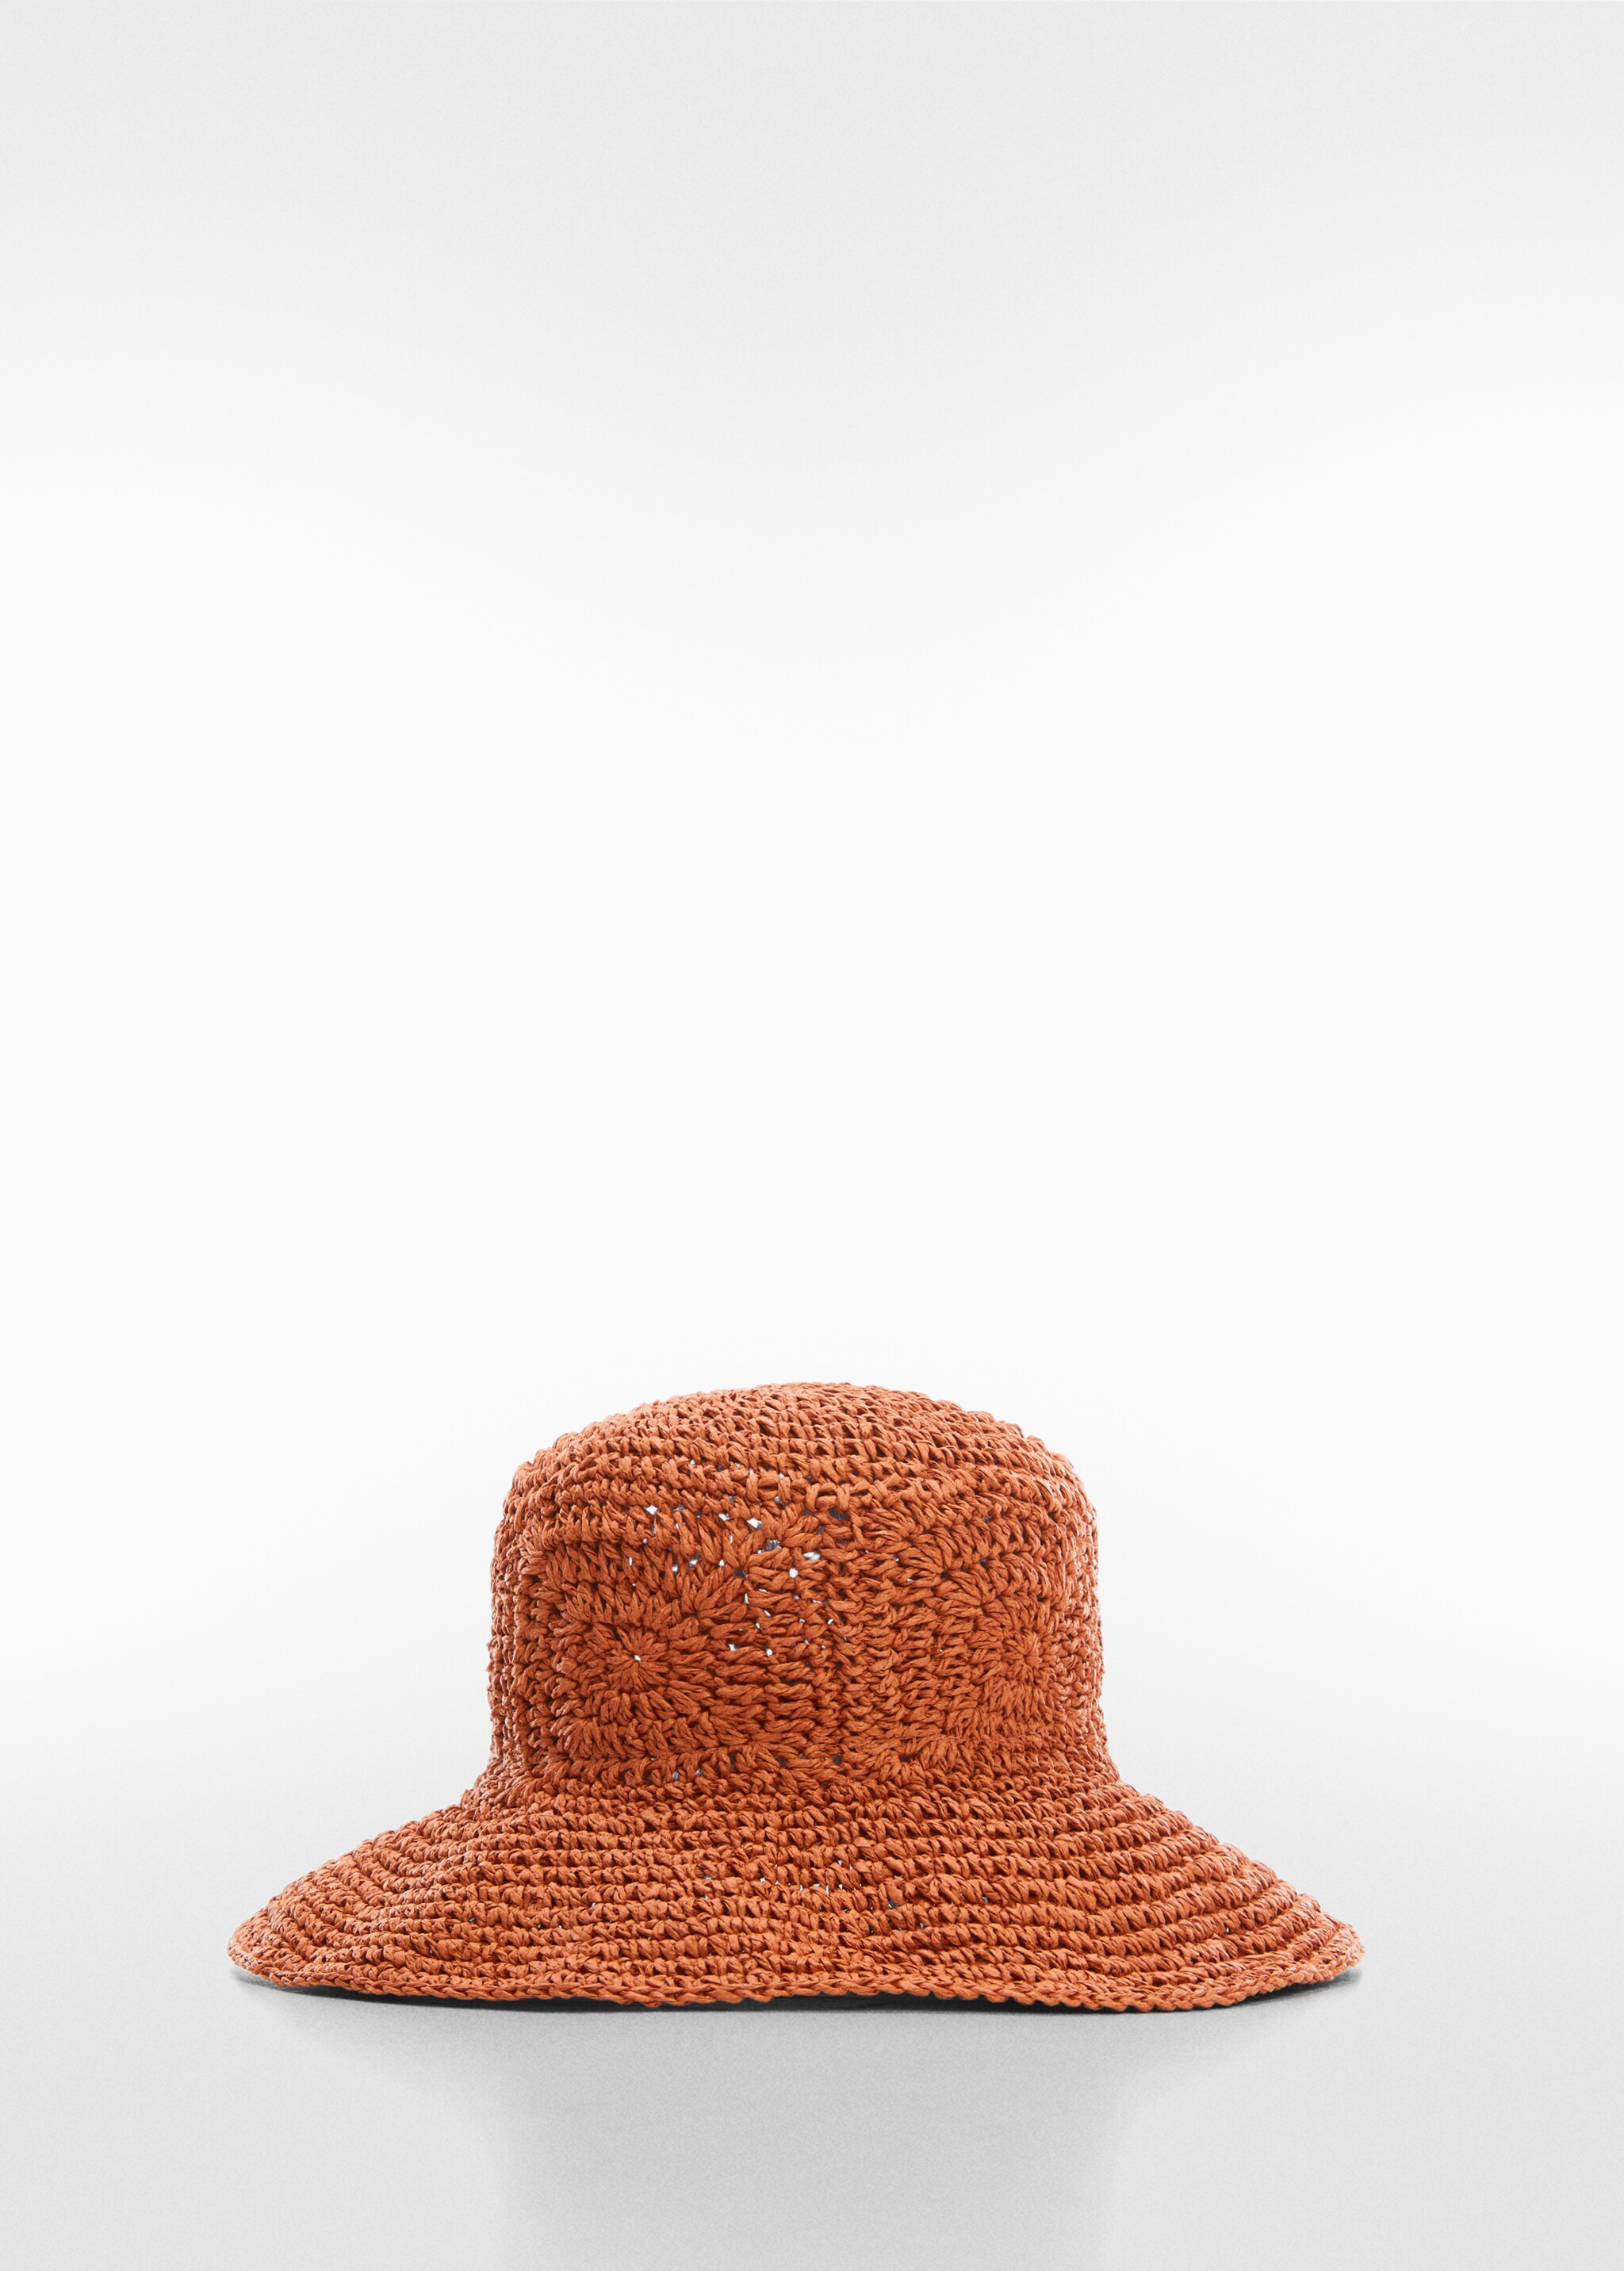 Natural fiber crochet hat - Article without model